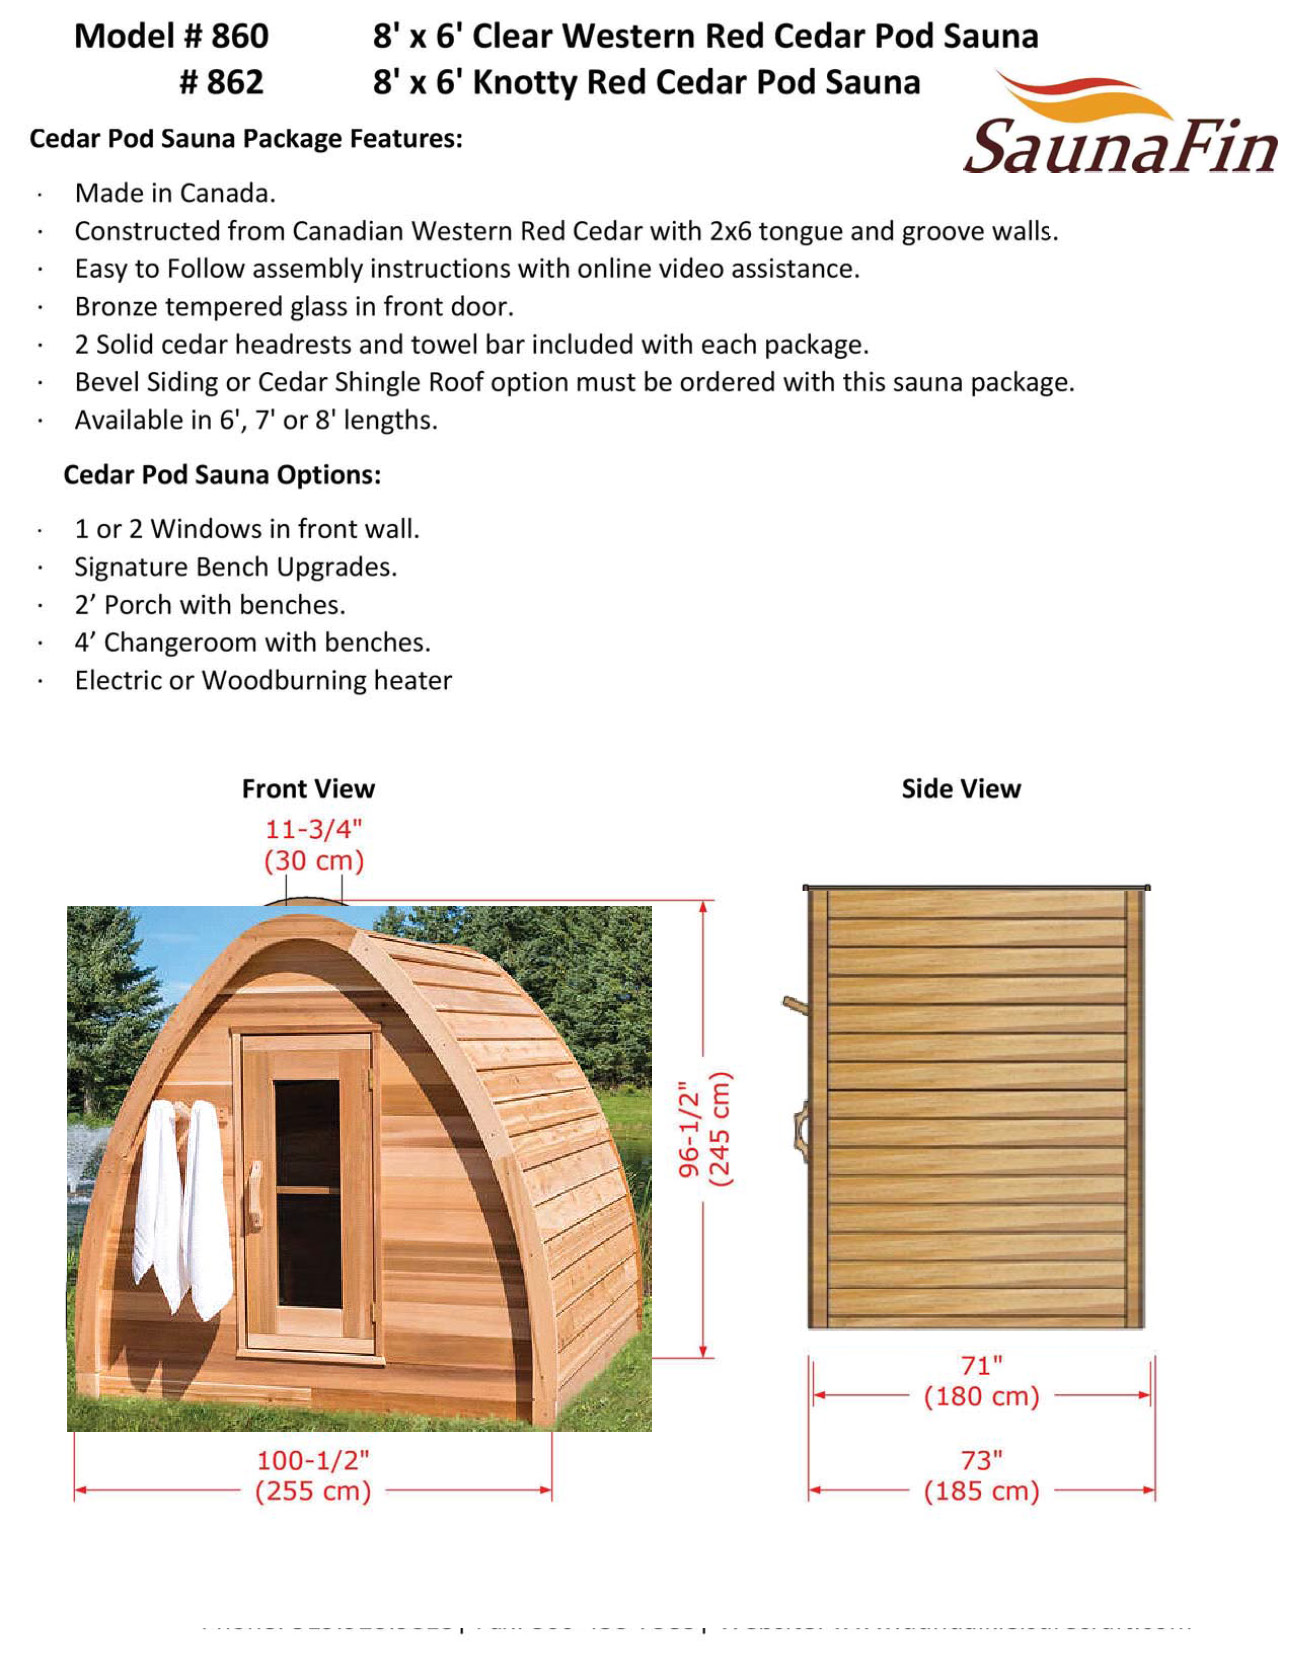 pod sauna size details